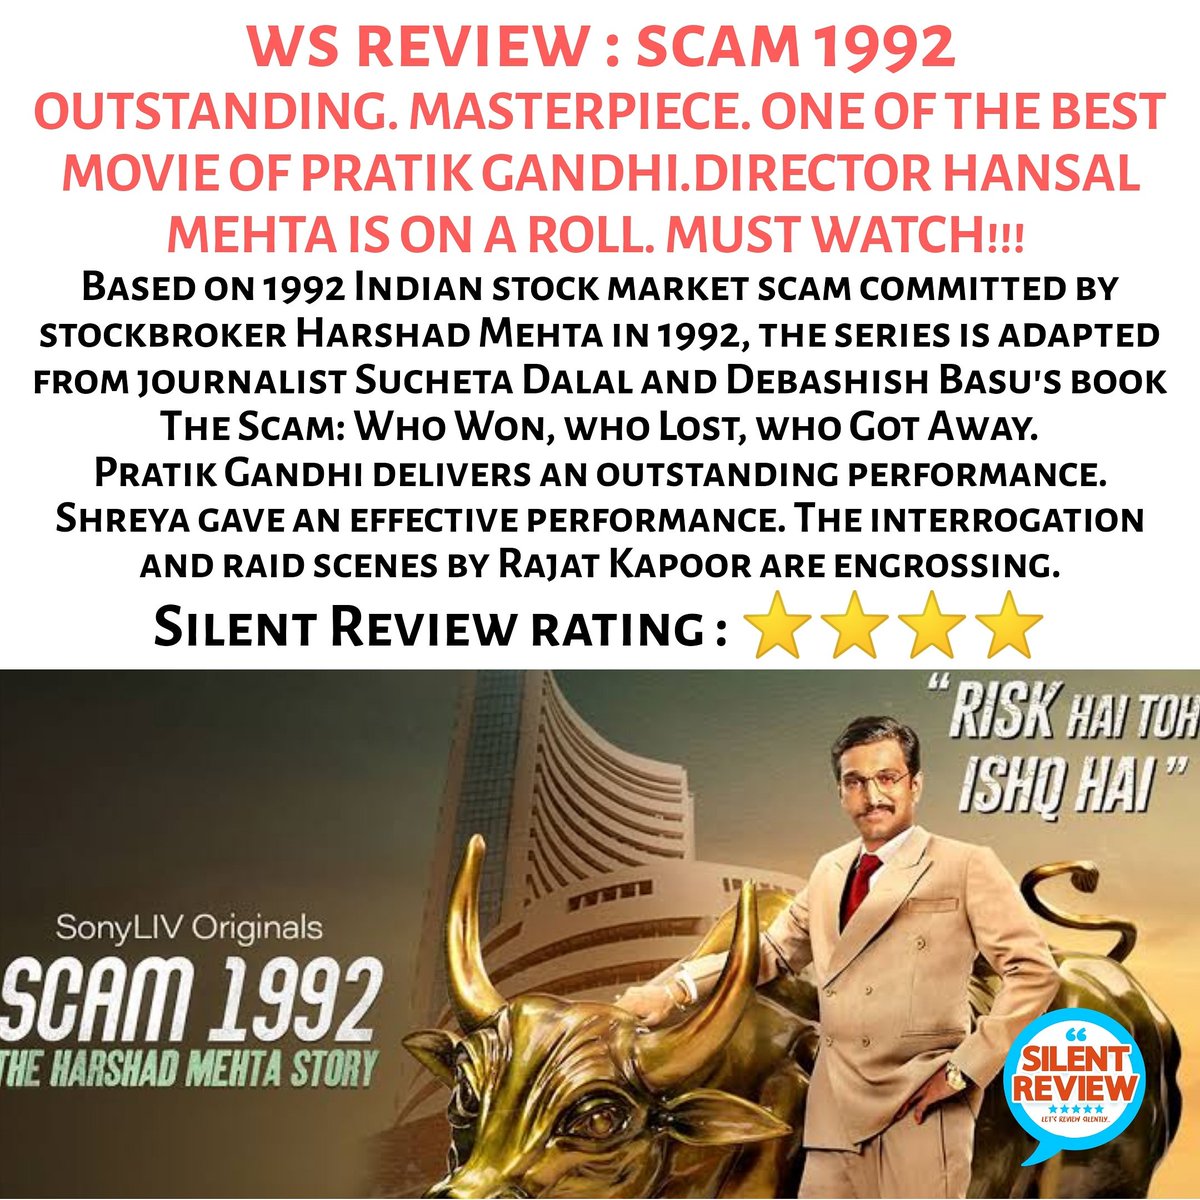 Silent review on latest web series #scam1992
On #sonyliv

#PratikGandhi #ShreyaDhanwanthary #SatishKaushik, #SharibHashmi #AnantMahadevan #NikhilDwivedi #KKRaina and #LalitParimoo
#HansalMehta
#rajatkapoor
#scam1992theharshadmehtastory #review #scam1992review